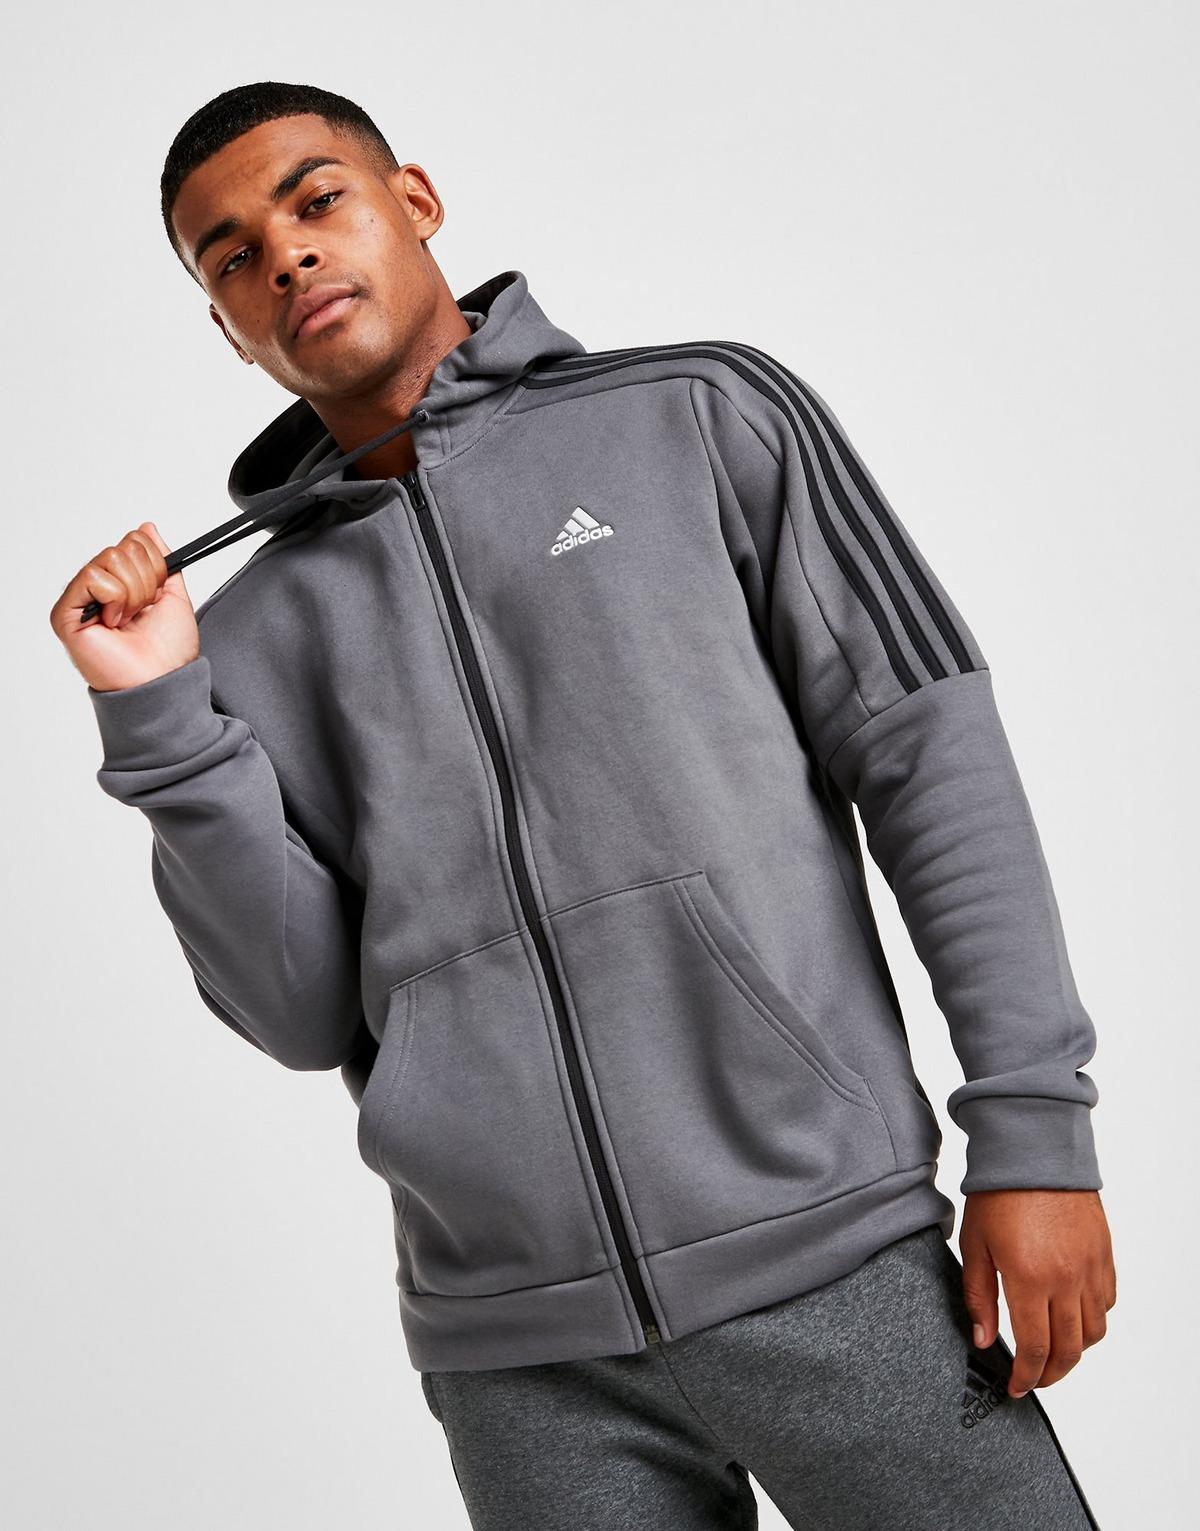 adidas Cotton Energize Full Zip Hoodie in Grey/Black (Gray) for Men - Lyst